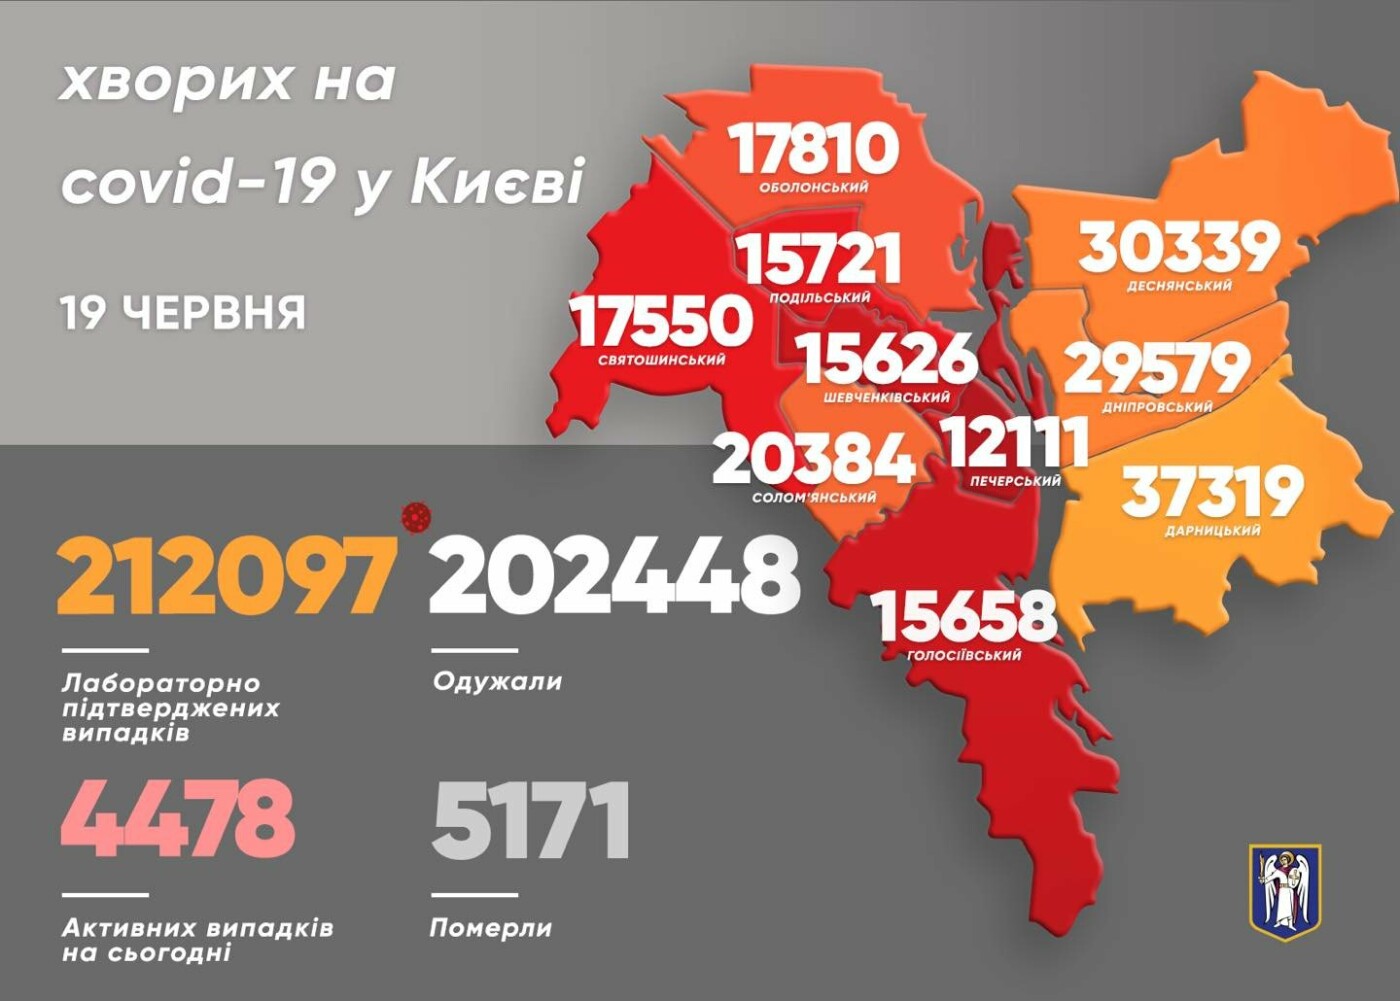 Коронавирус в Киеве: появилась статистика COVID-19 по районам на 19 июня